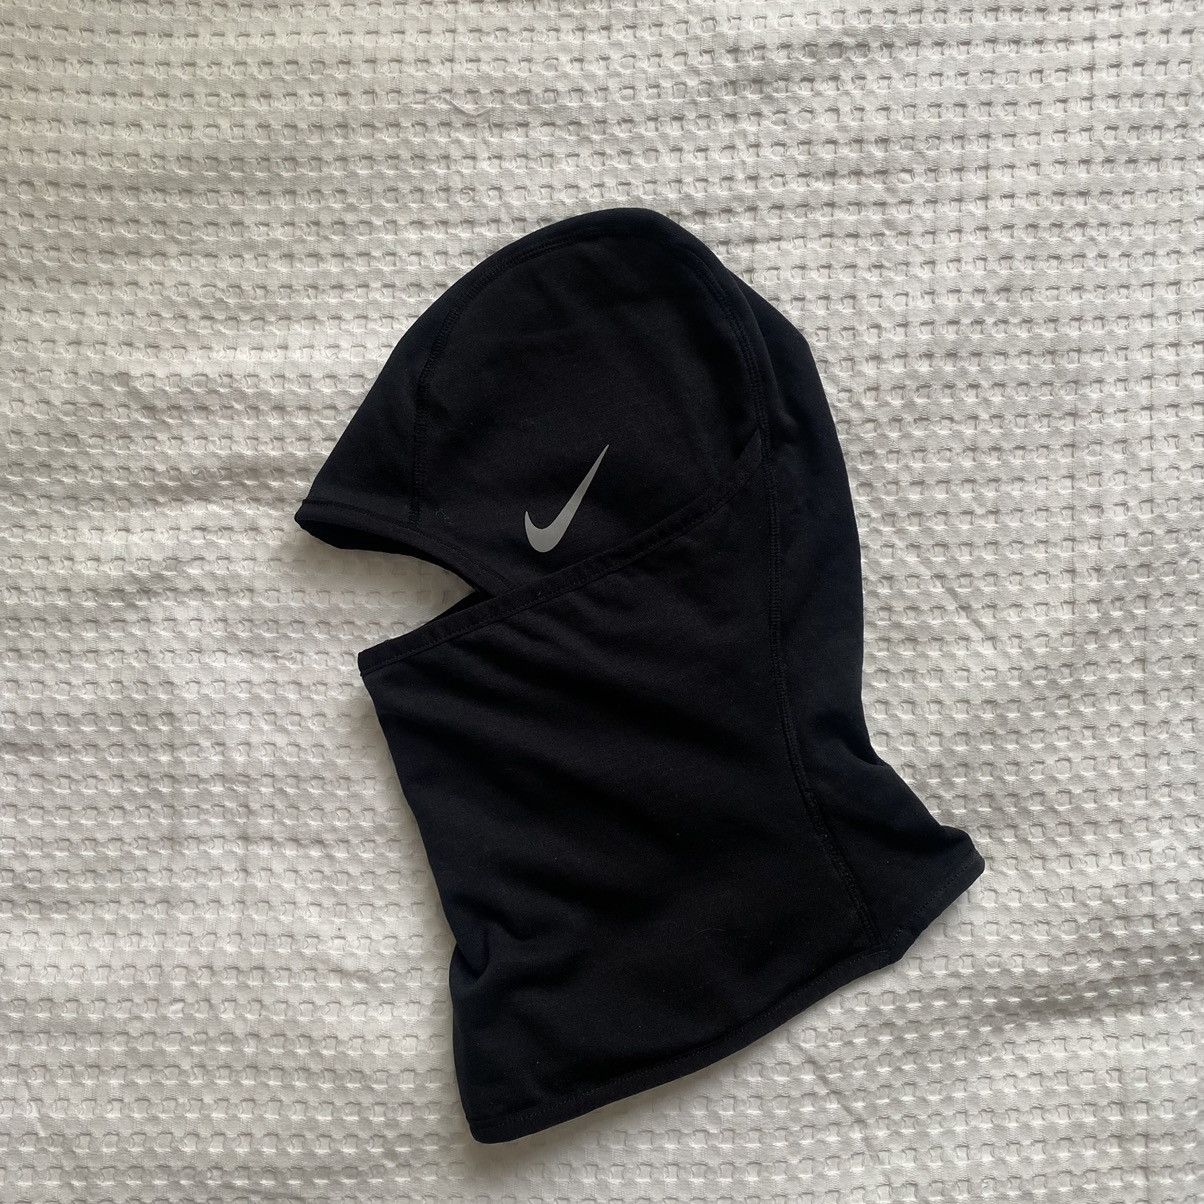 Nike Nike Ski Mask Size ONE SIZE - 4 Preview